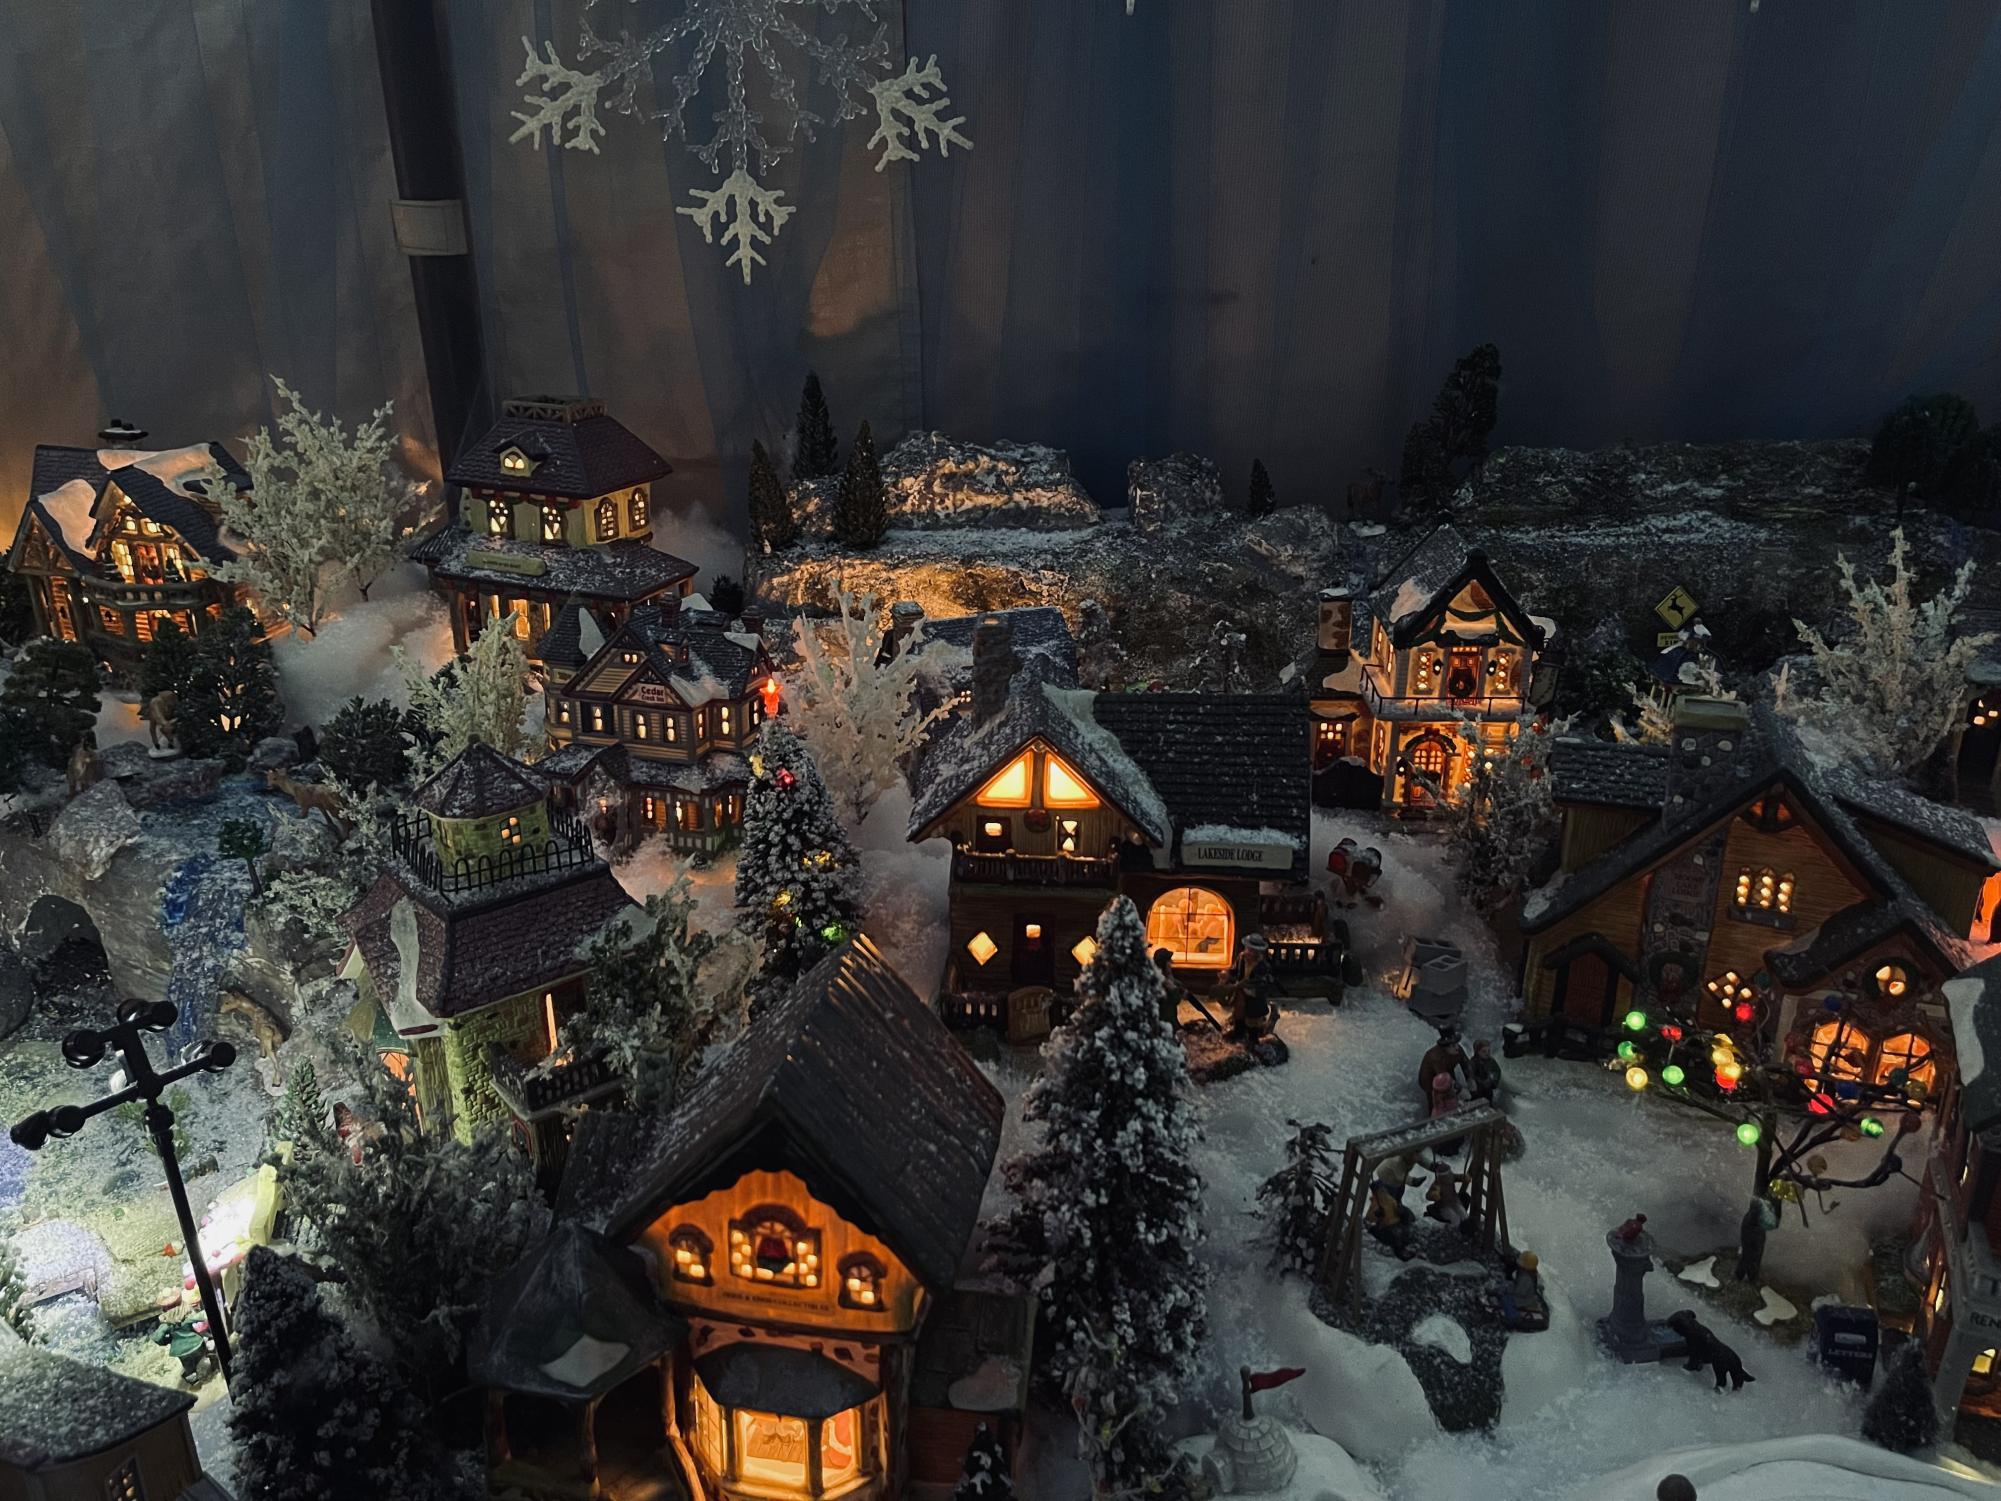 Sightseeing+the+town%3A+Christmas+lights+around+Pleasanton